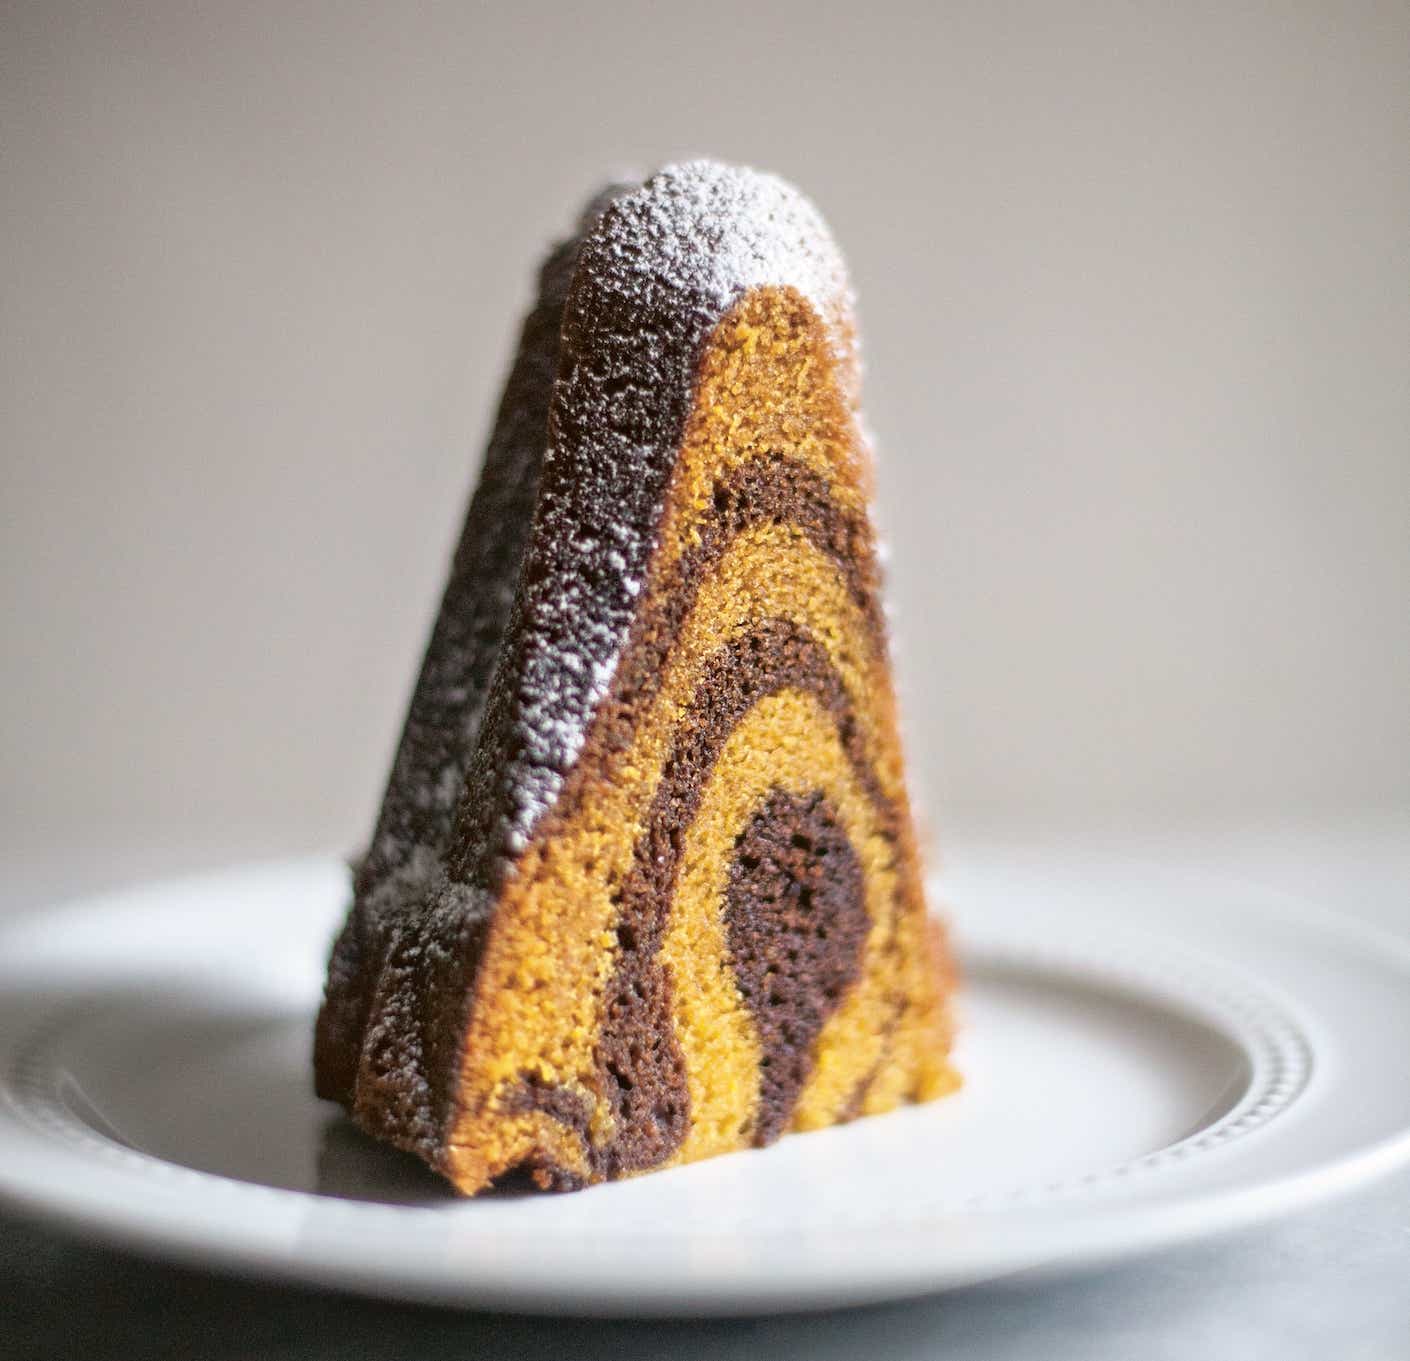 Pumpkin-Mocha Swirl Bundt Cake, From Zoë François